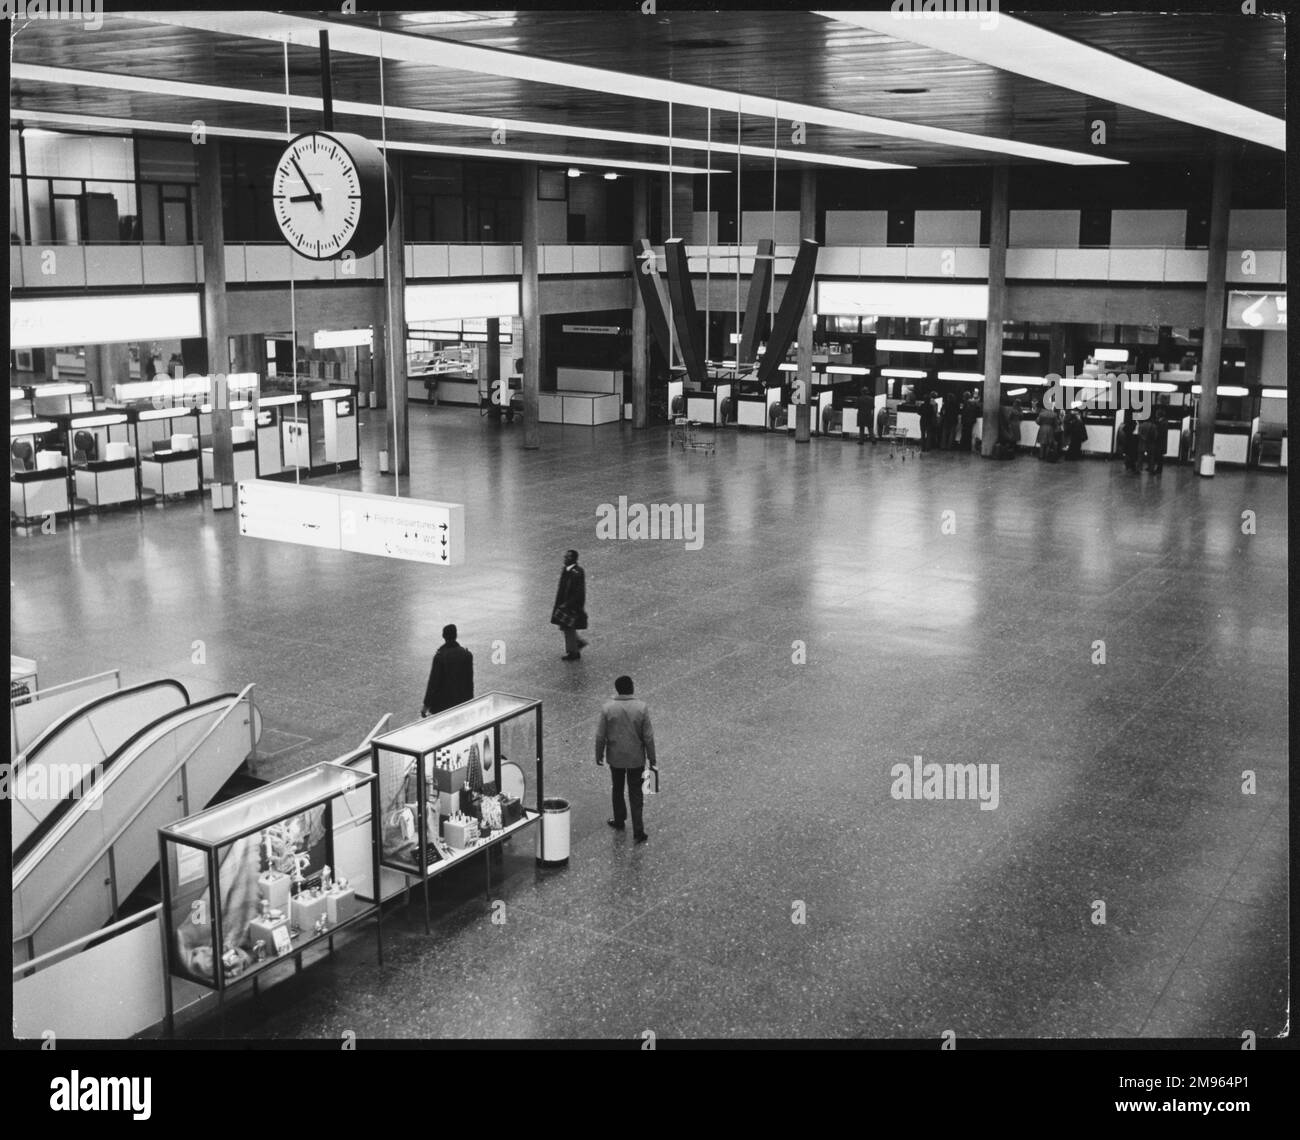 The vast interior of London Gatwick Airport, showing one the escalators beneath the clock. Stock Photo